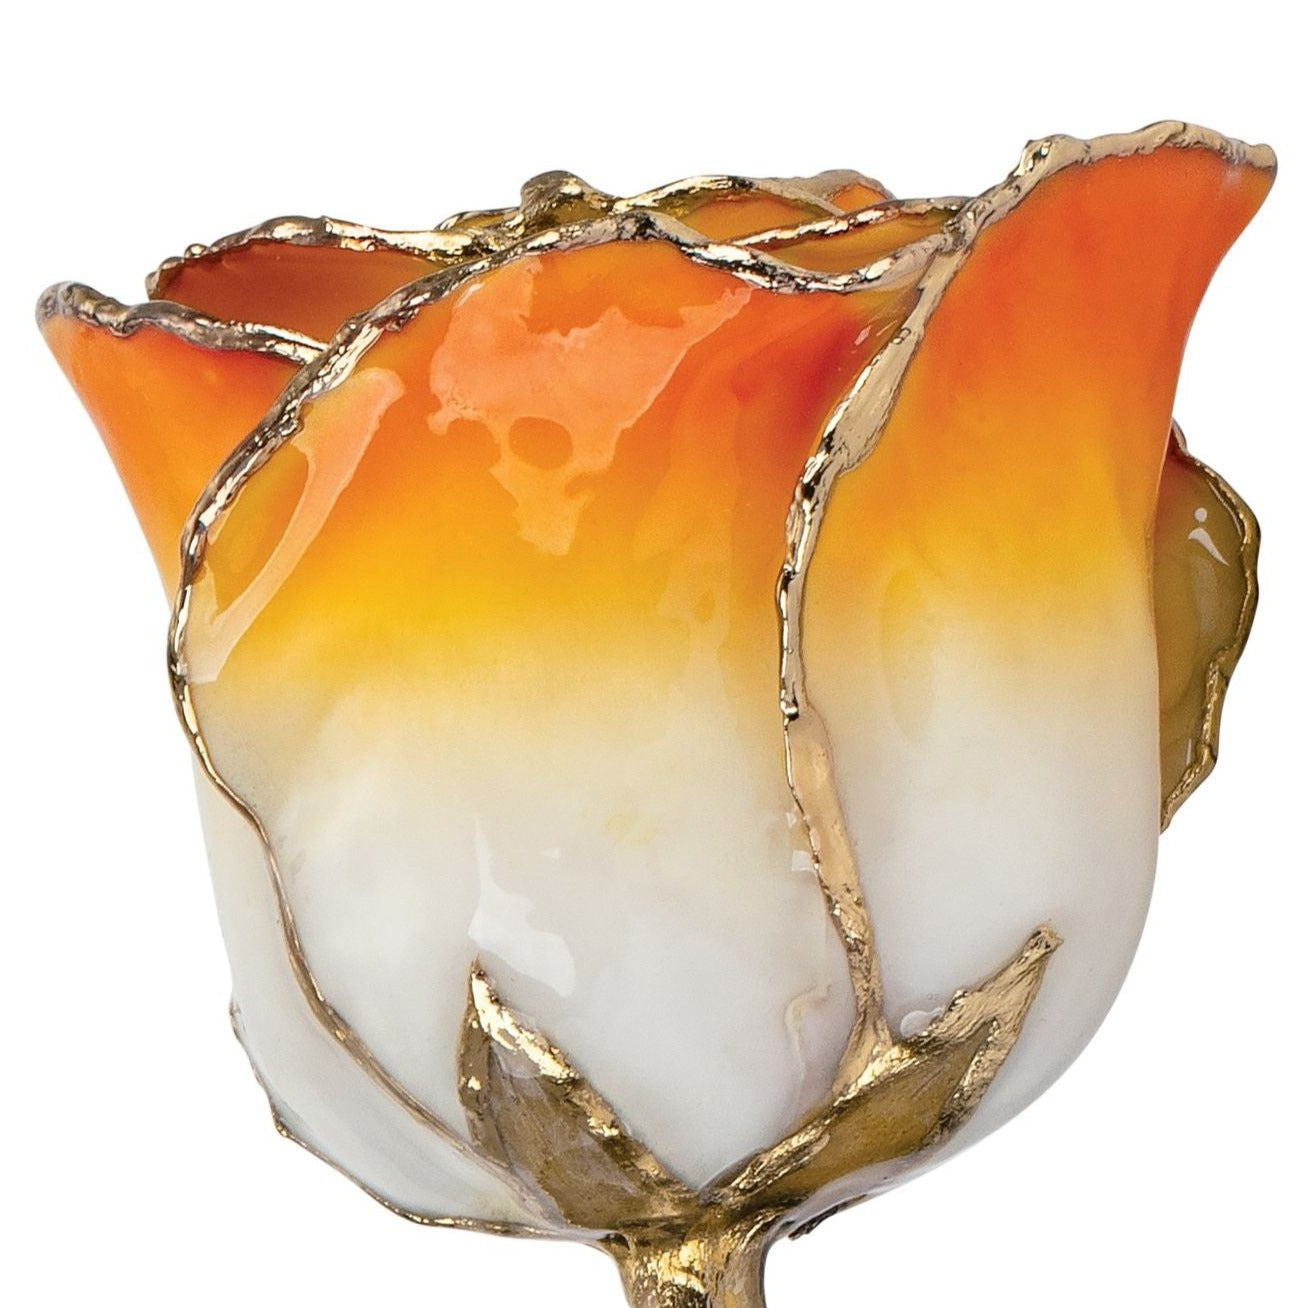 Preserved Cream Orange Rose with 24K Gold Trim for Luxury Home Decor